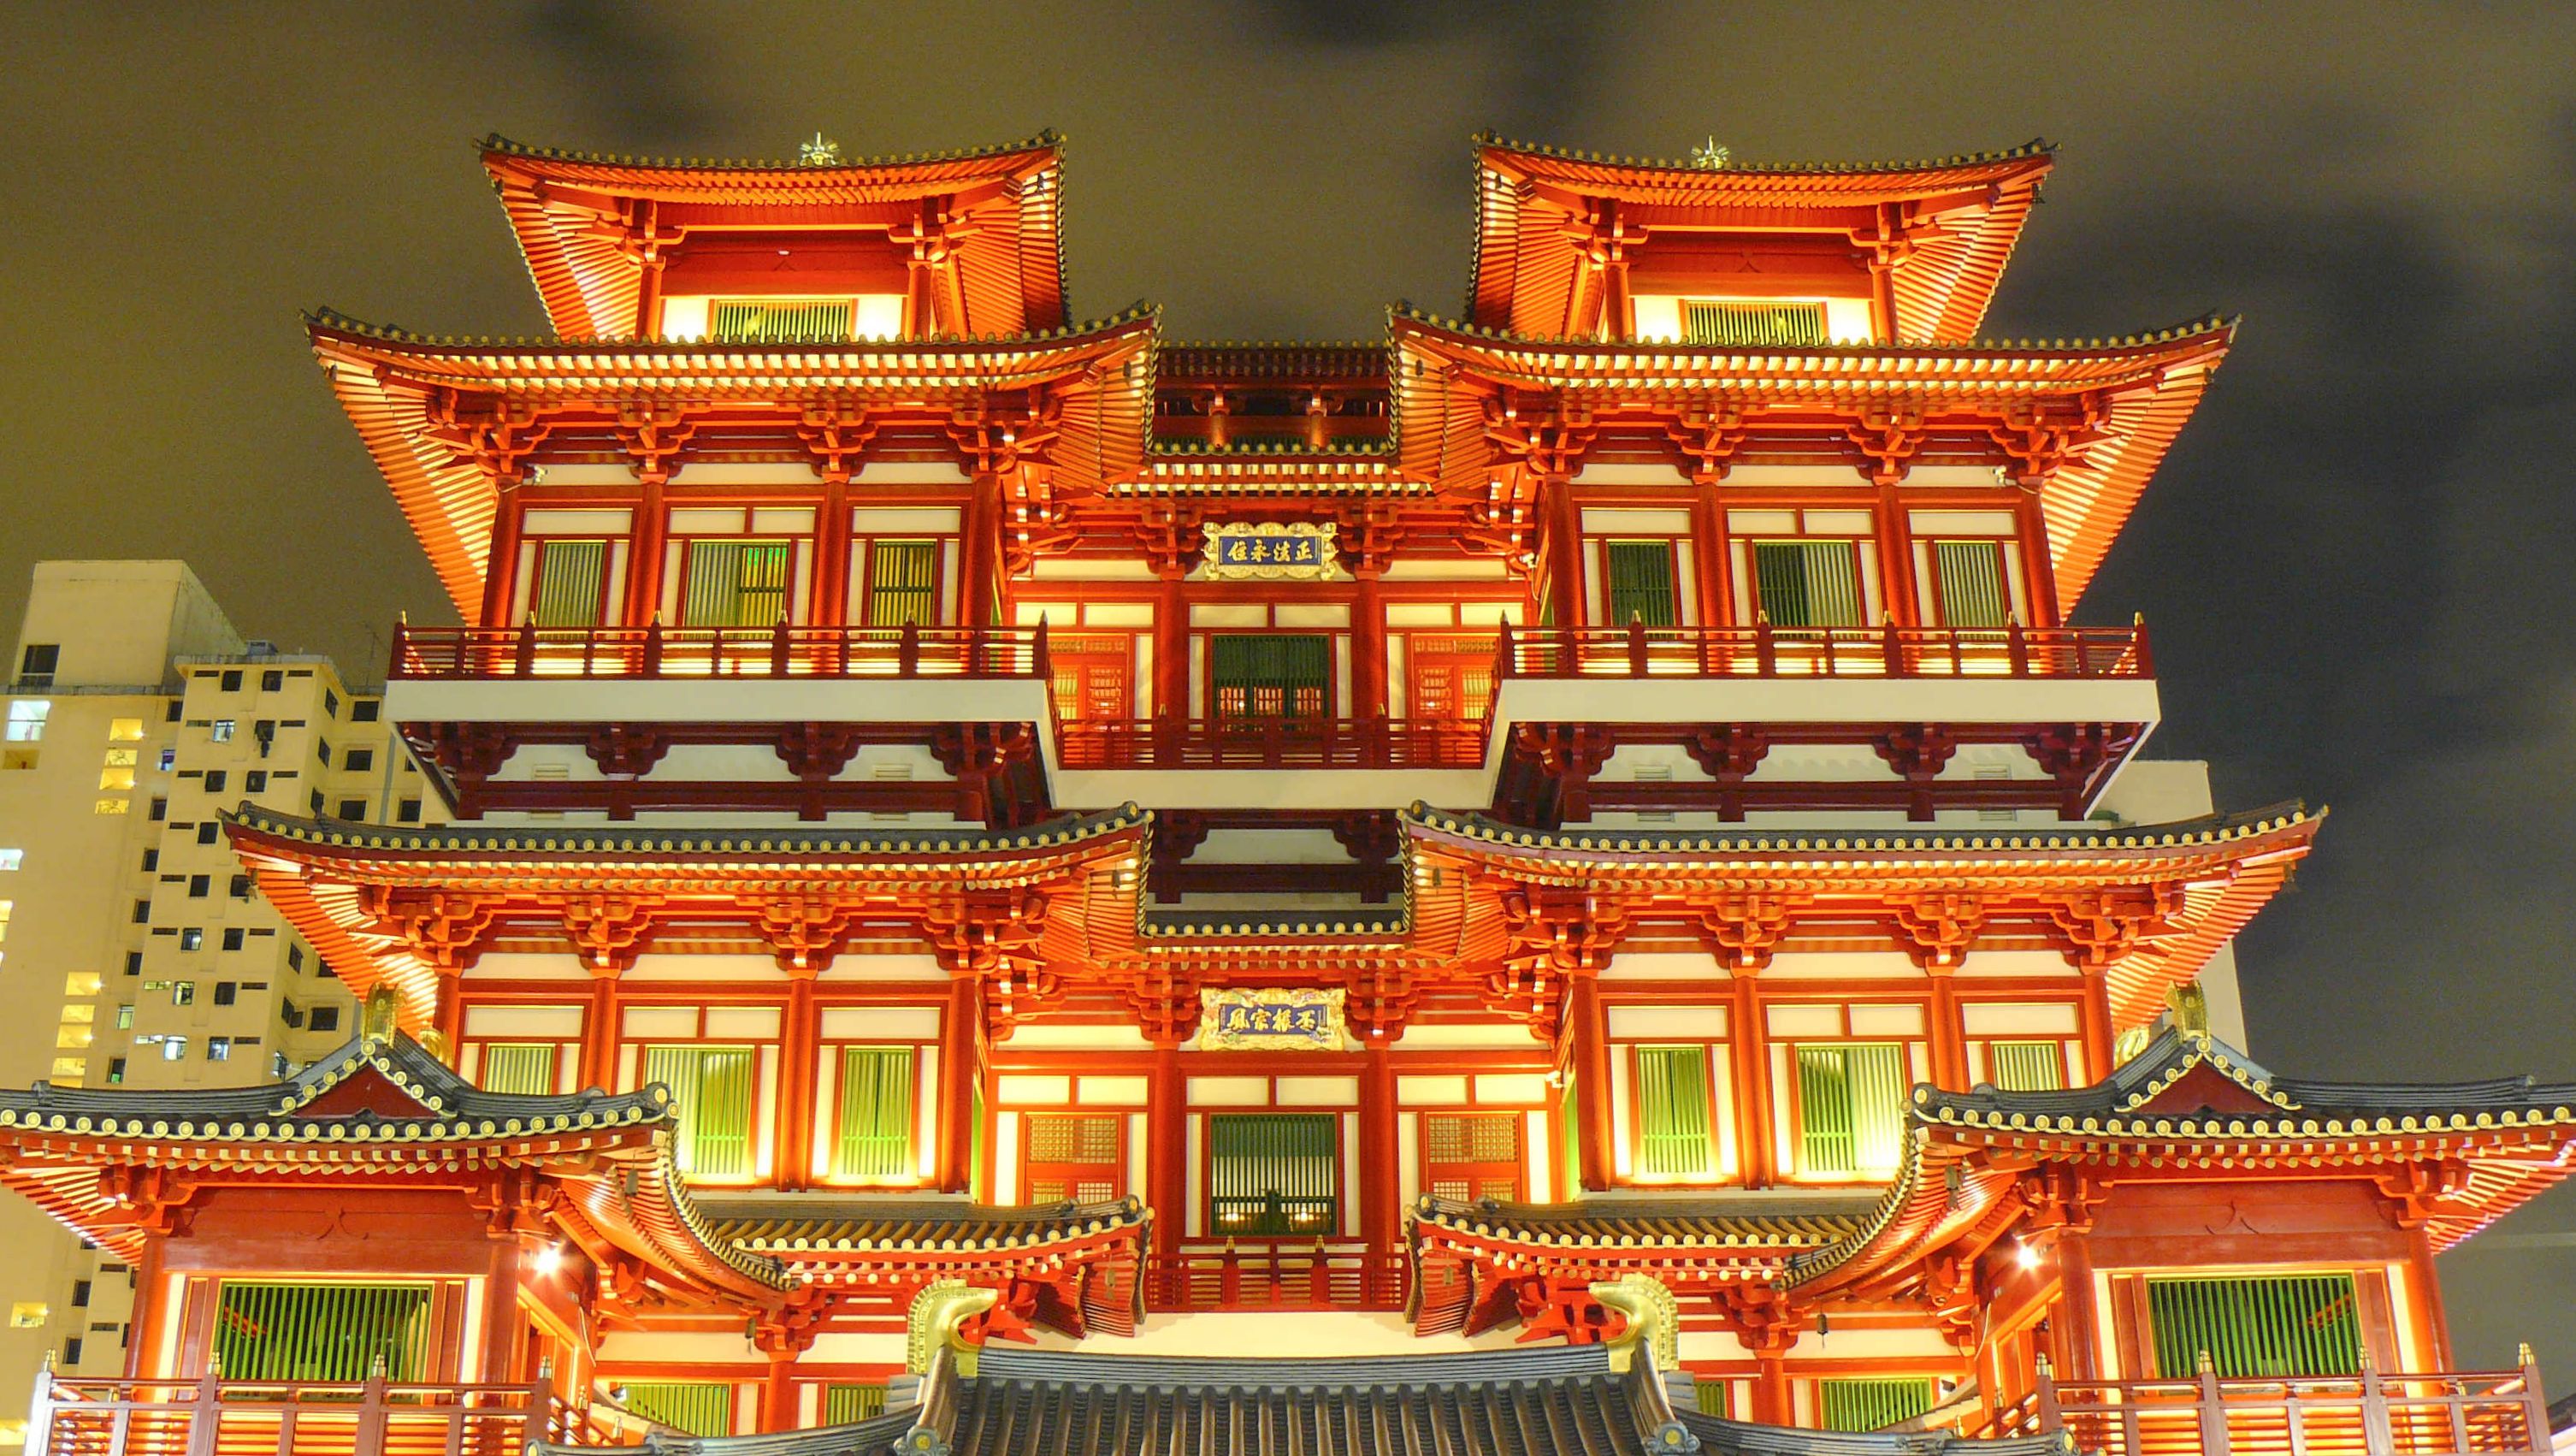 Choa Chu Kang Combined Temple